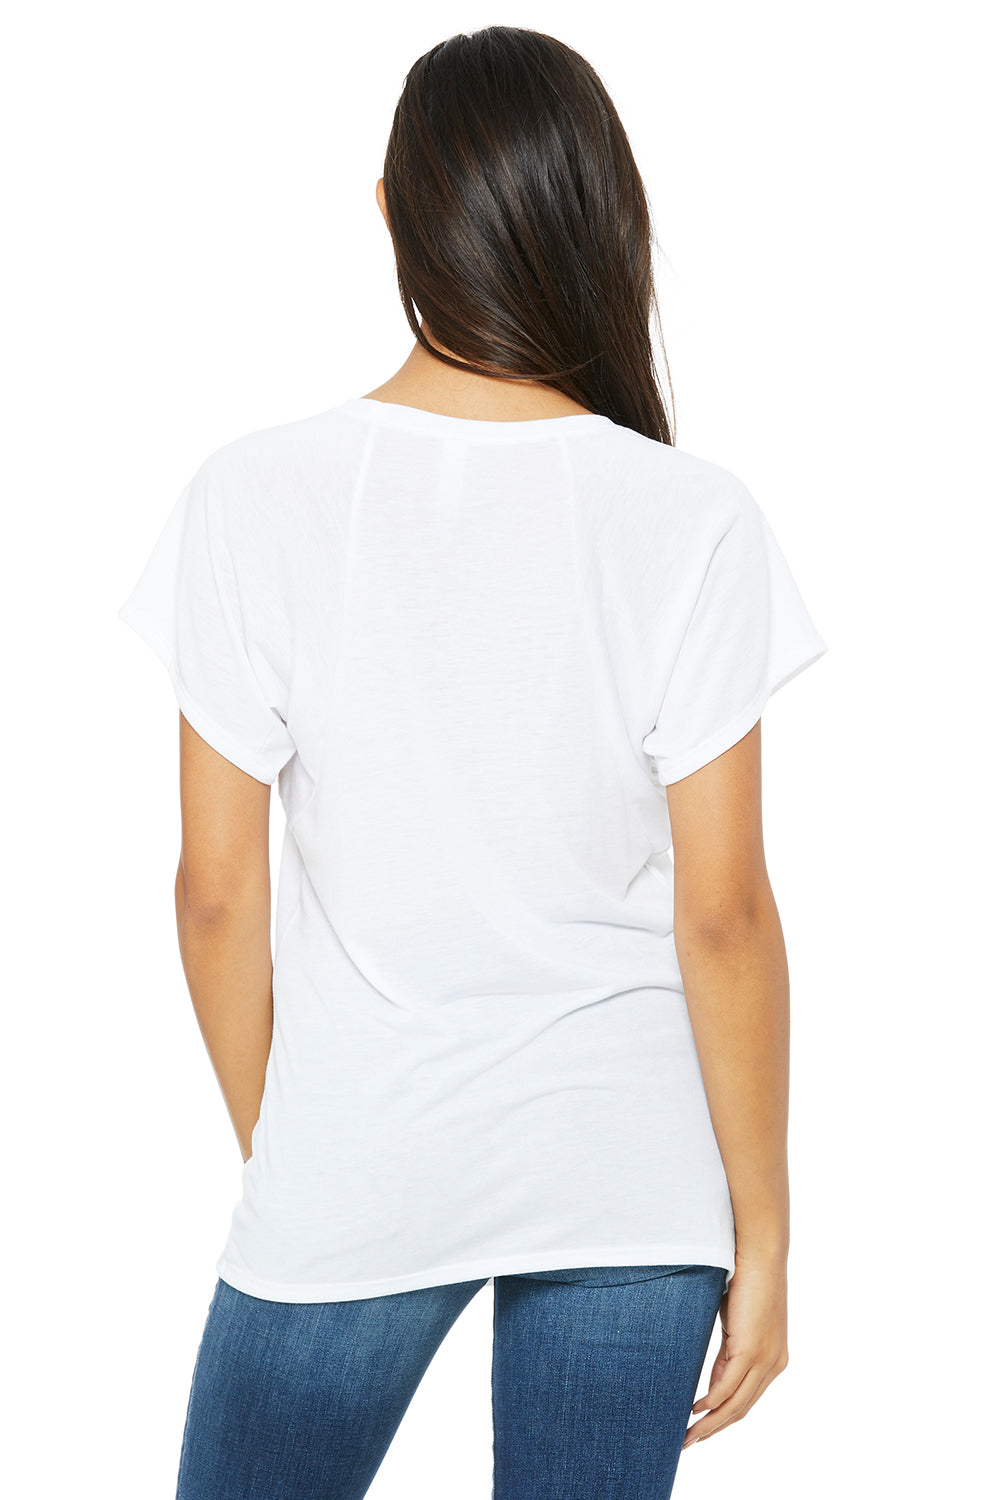 Bella + Canvas B8801/8801 Womens Flowy Short Sleeve Scoop Neck T-Shirt White Model Back